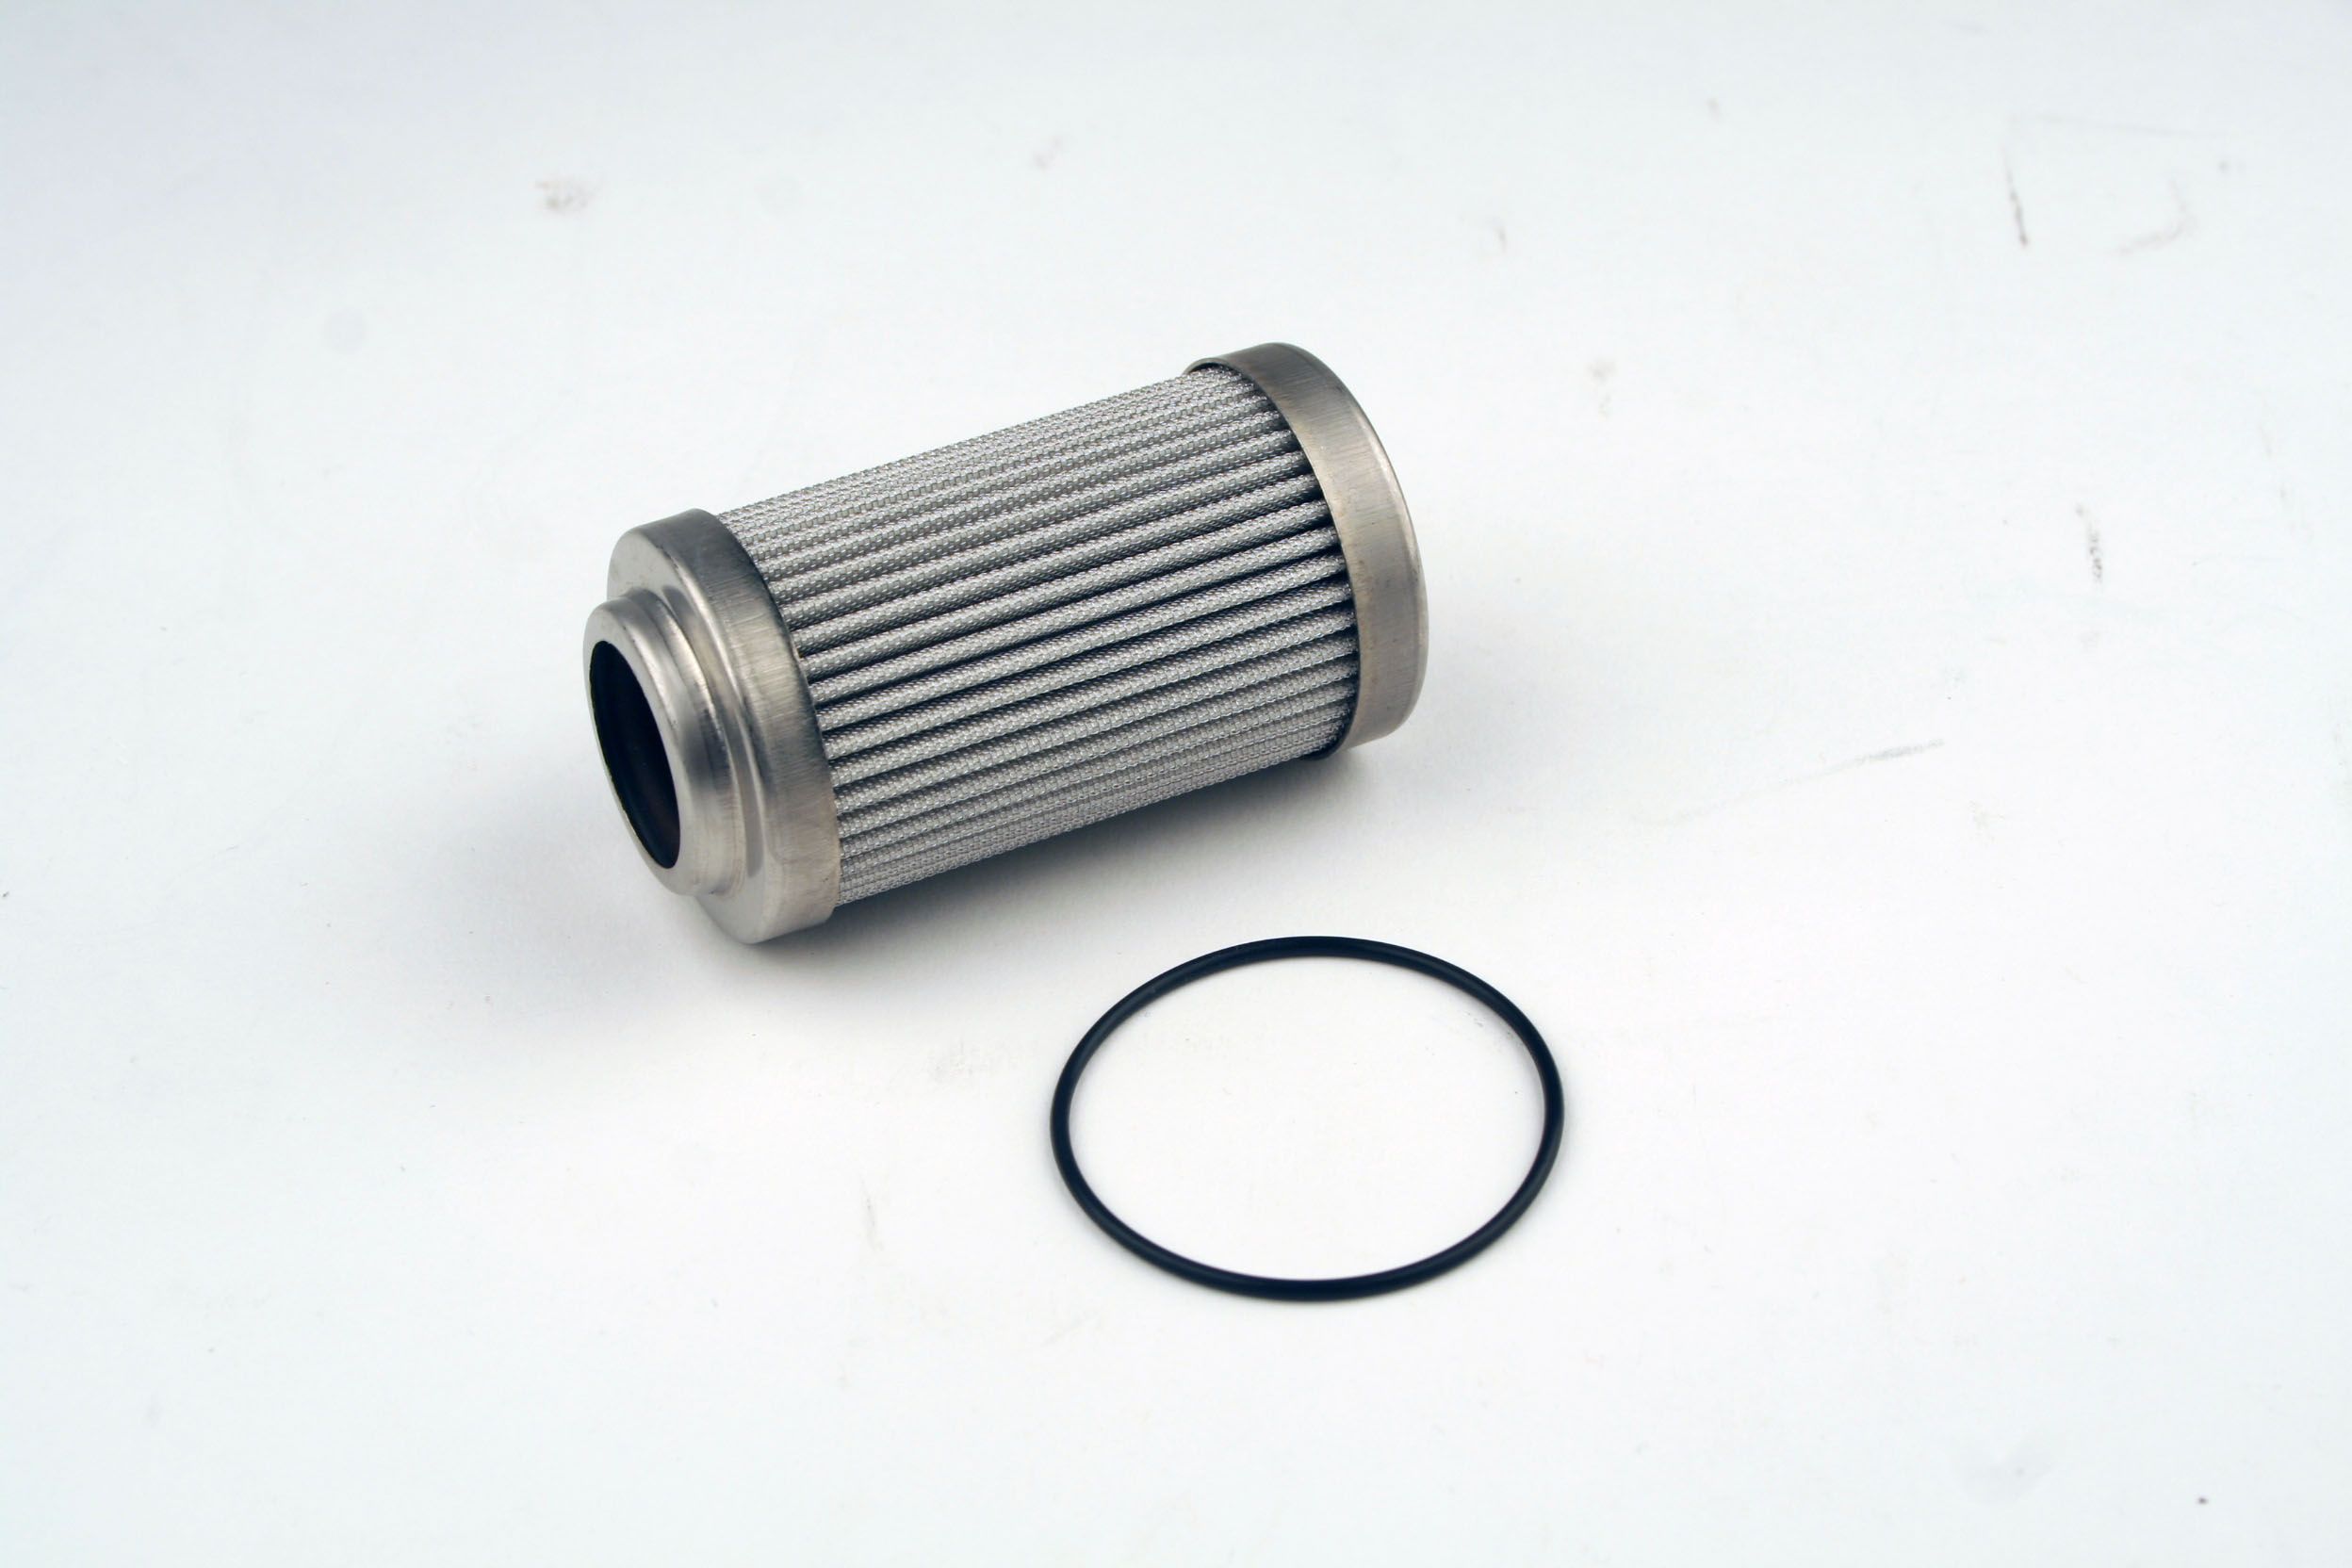 Aeromotive Filter Element - 10 Micron Microglass (Fits 12340/12350 Filter Housings)